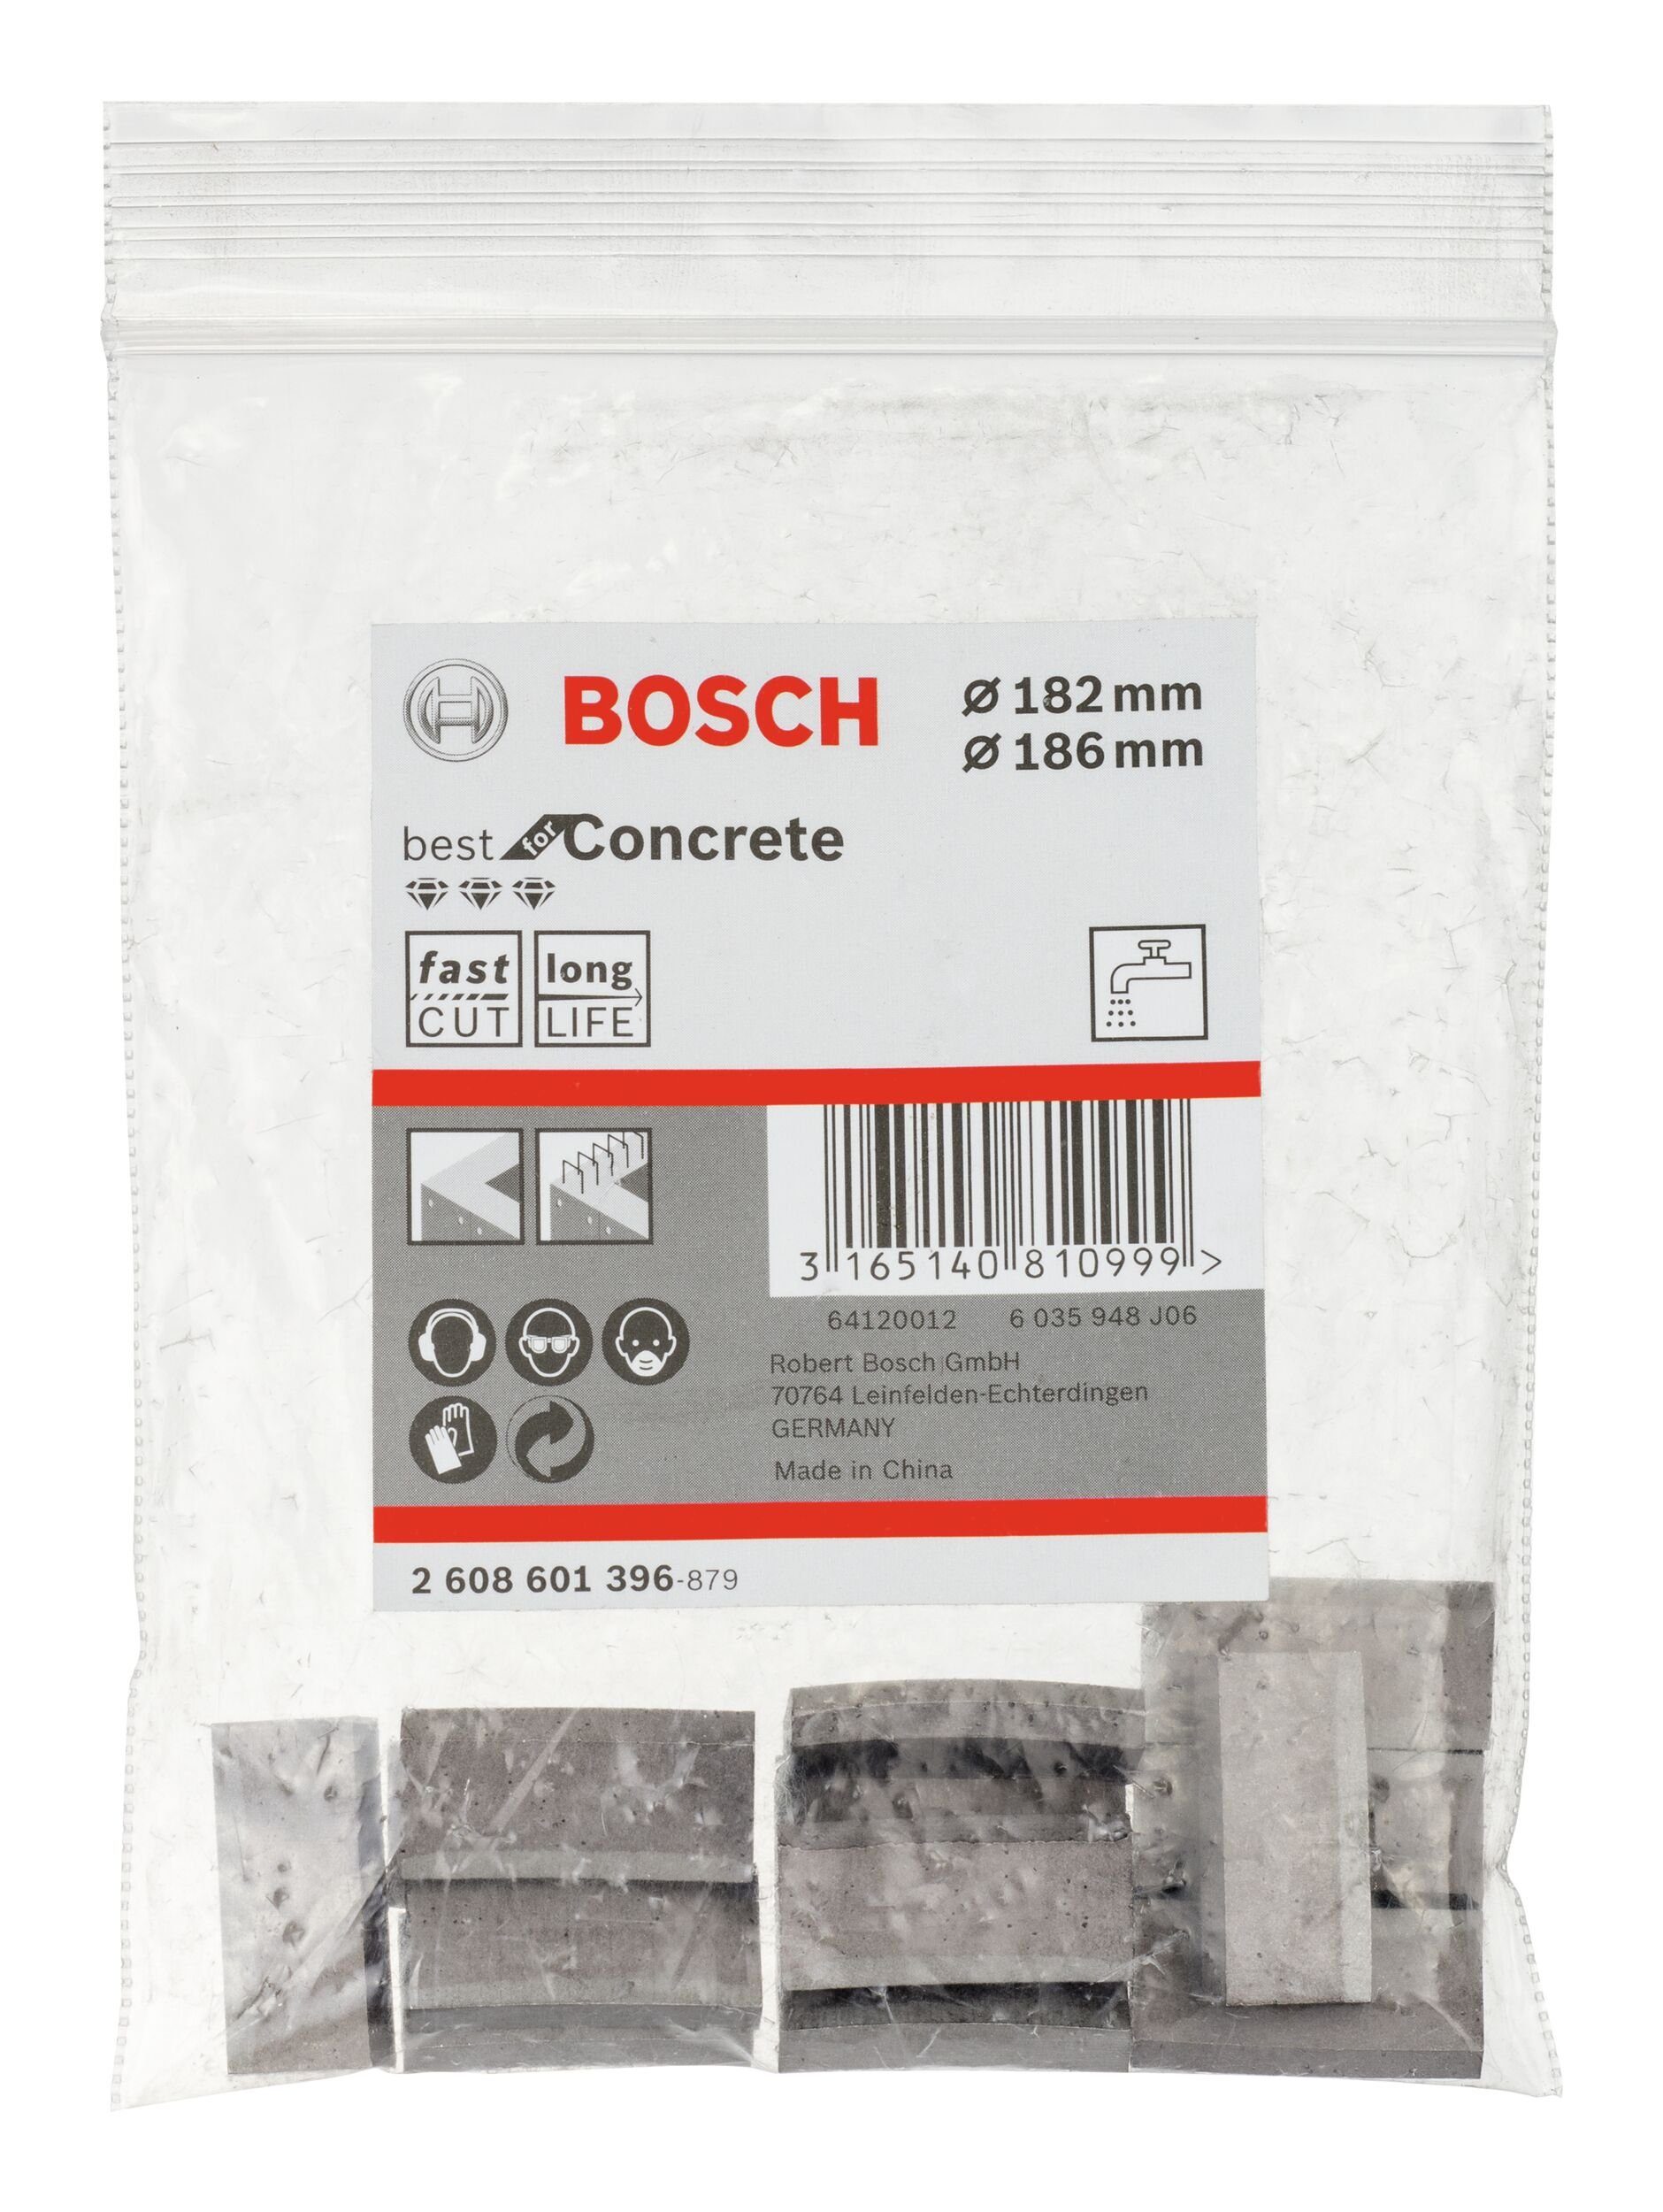 BOSCH UNC Concrete f. 1/4" Bohrkrone, for Diamantbohrkronen Best 1 13 Segmente